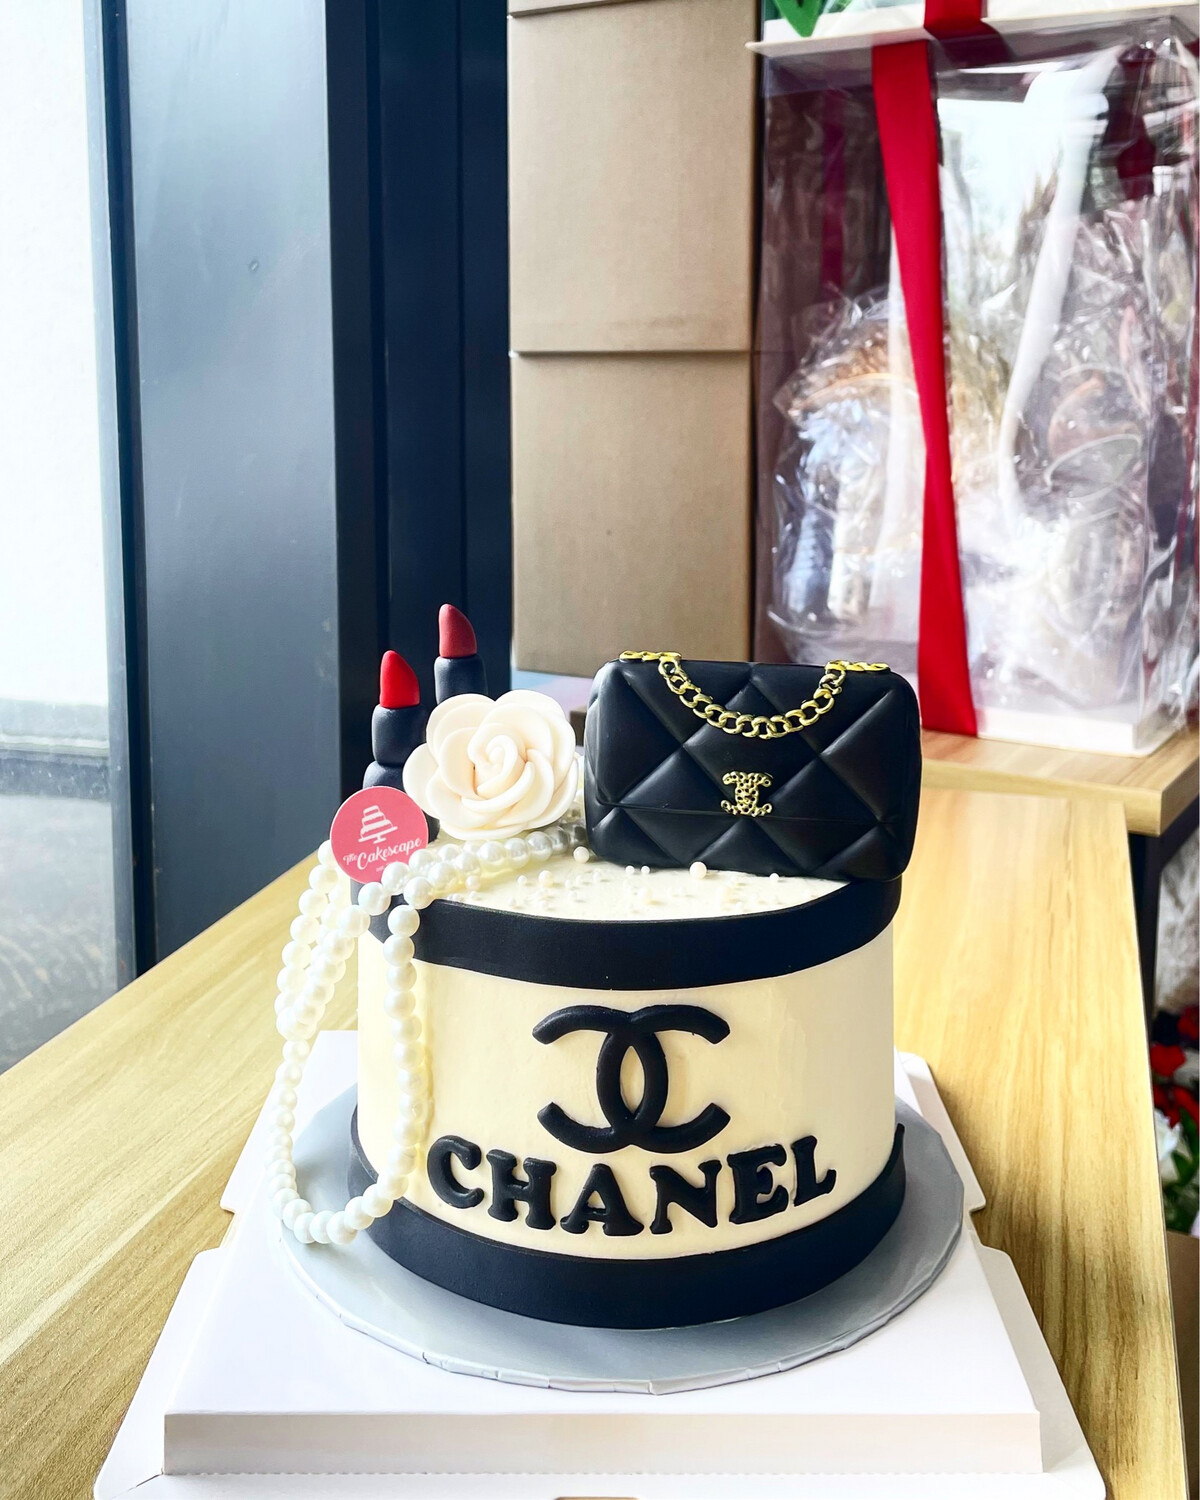 Brand - Chanel Cake 1